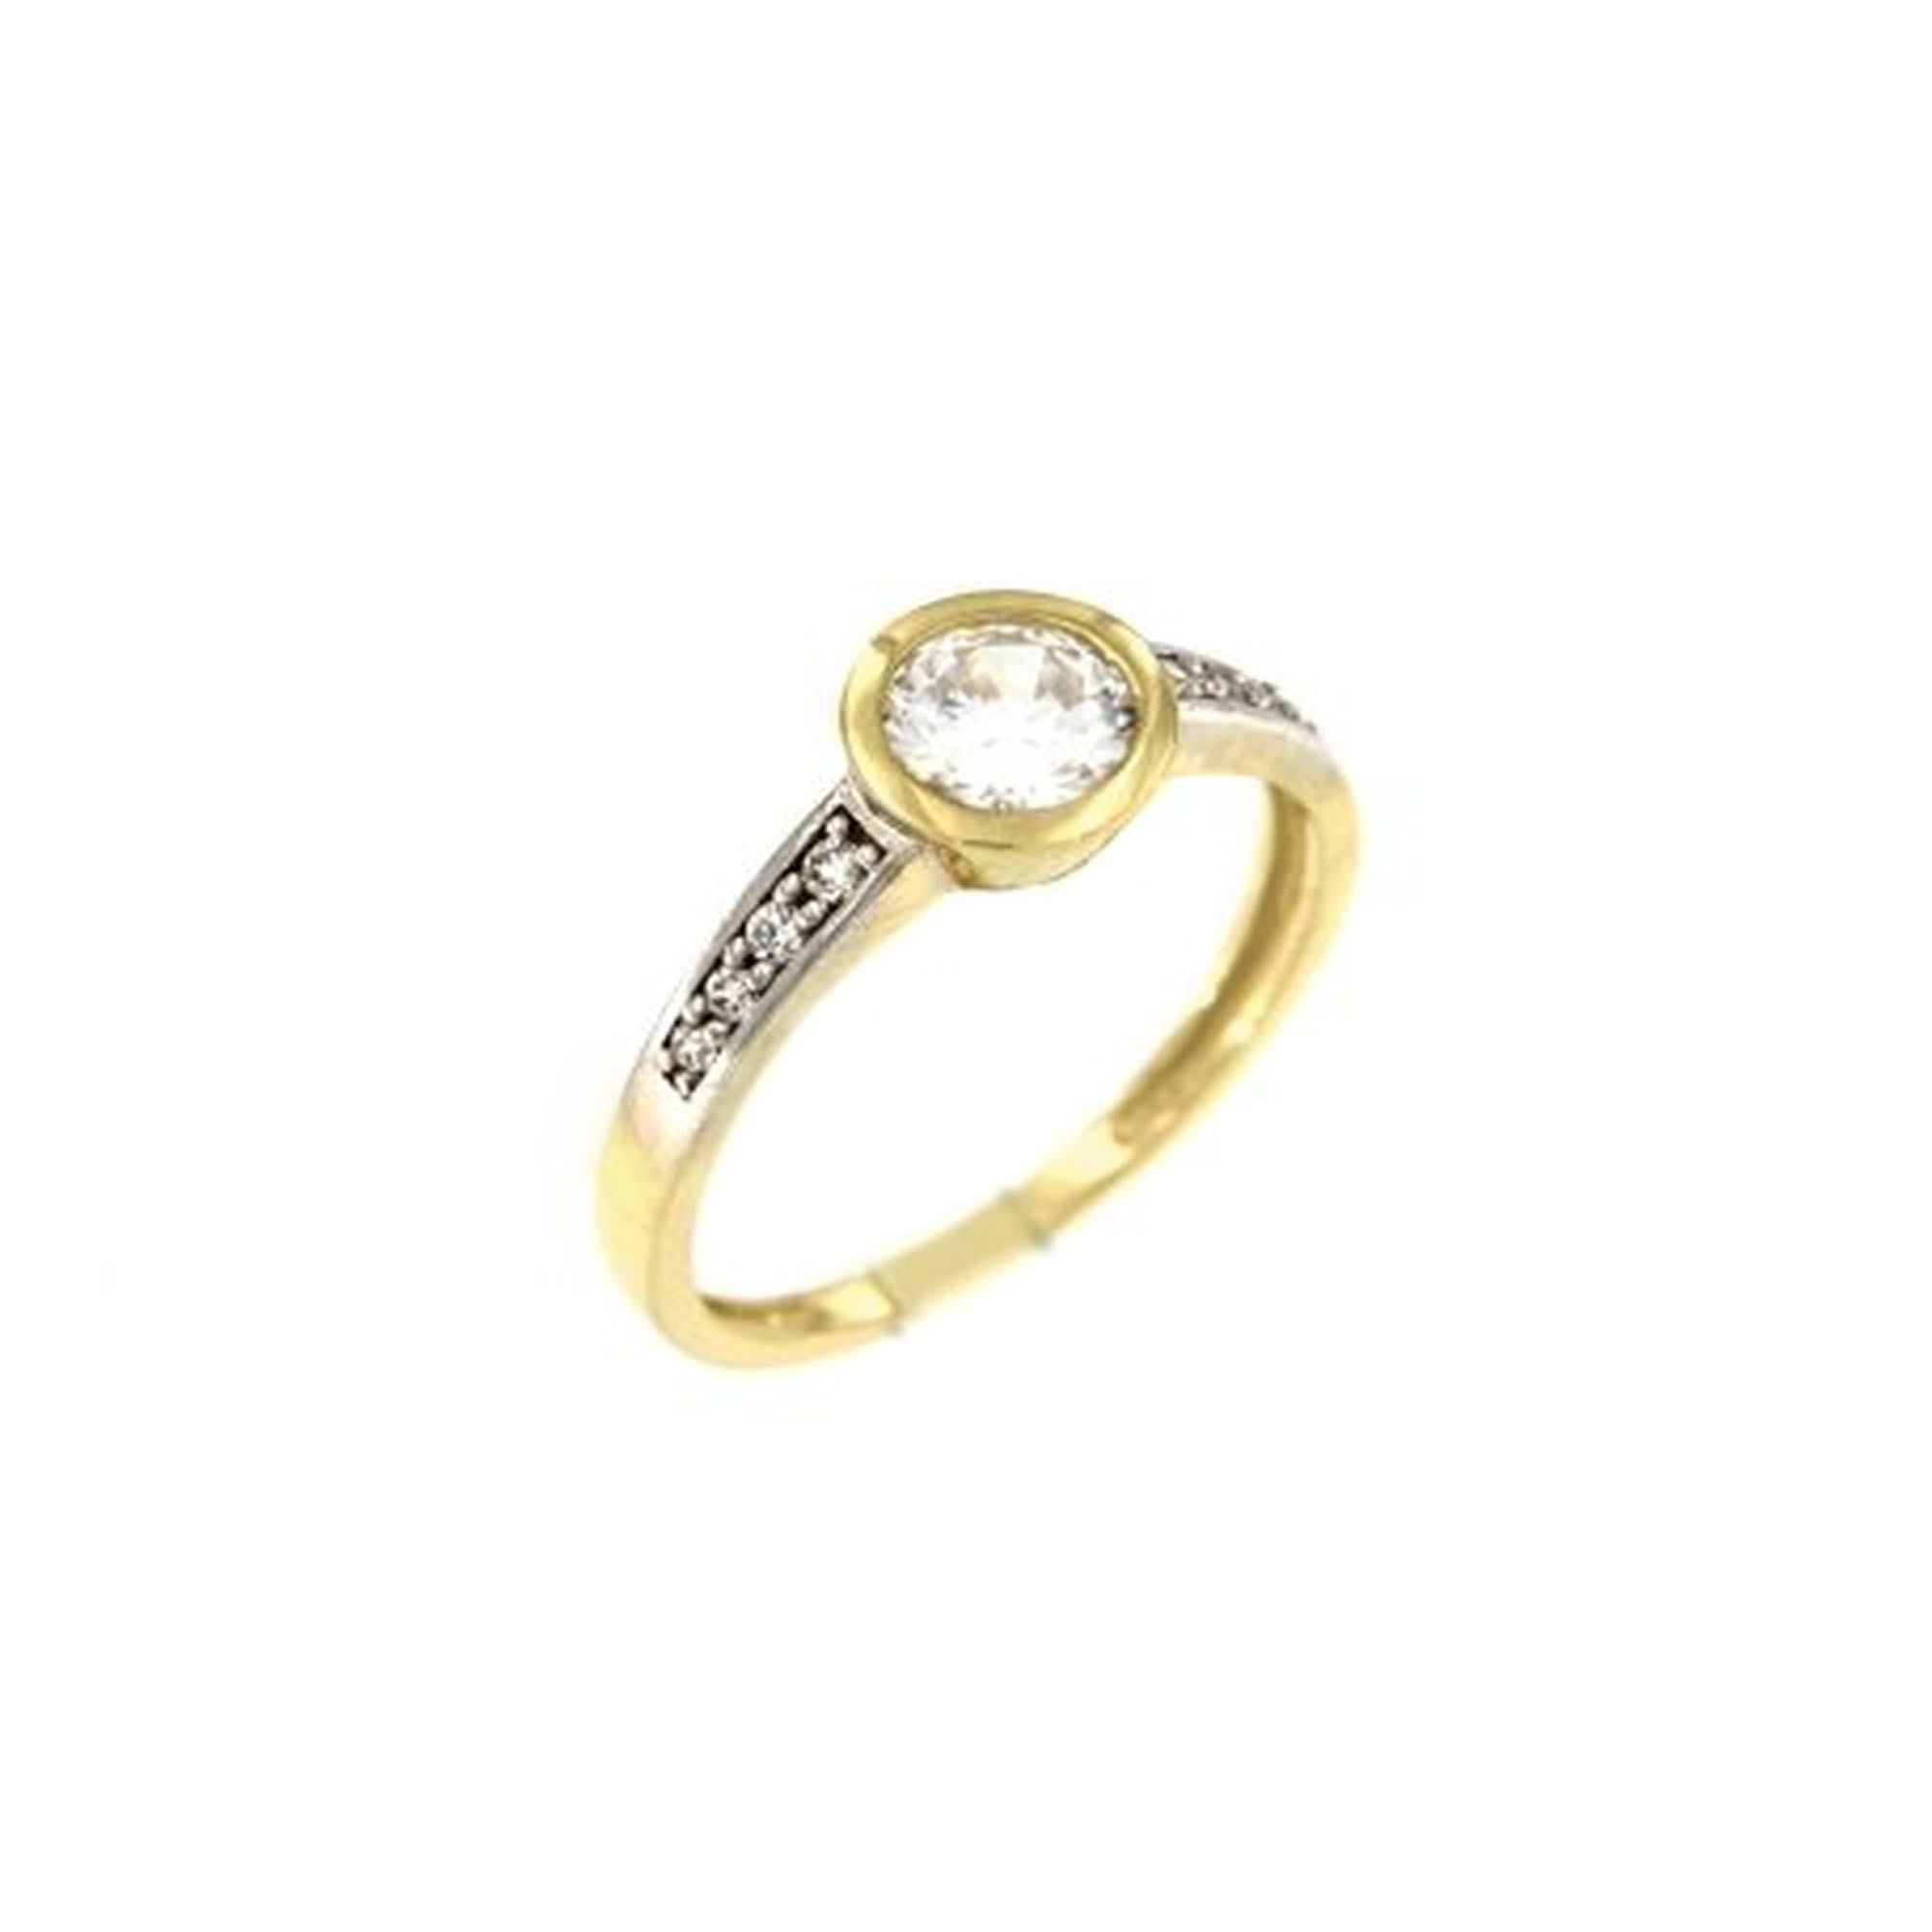 MOISS Moiss prsten ze žlutého zlata ANASTASIA RA000337 Velikost 53 mm RA000337 + doprava ZDARMA